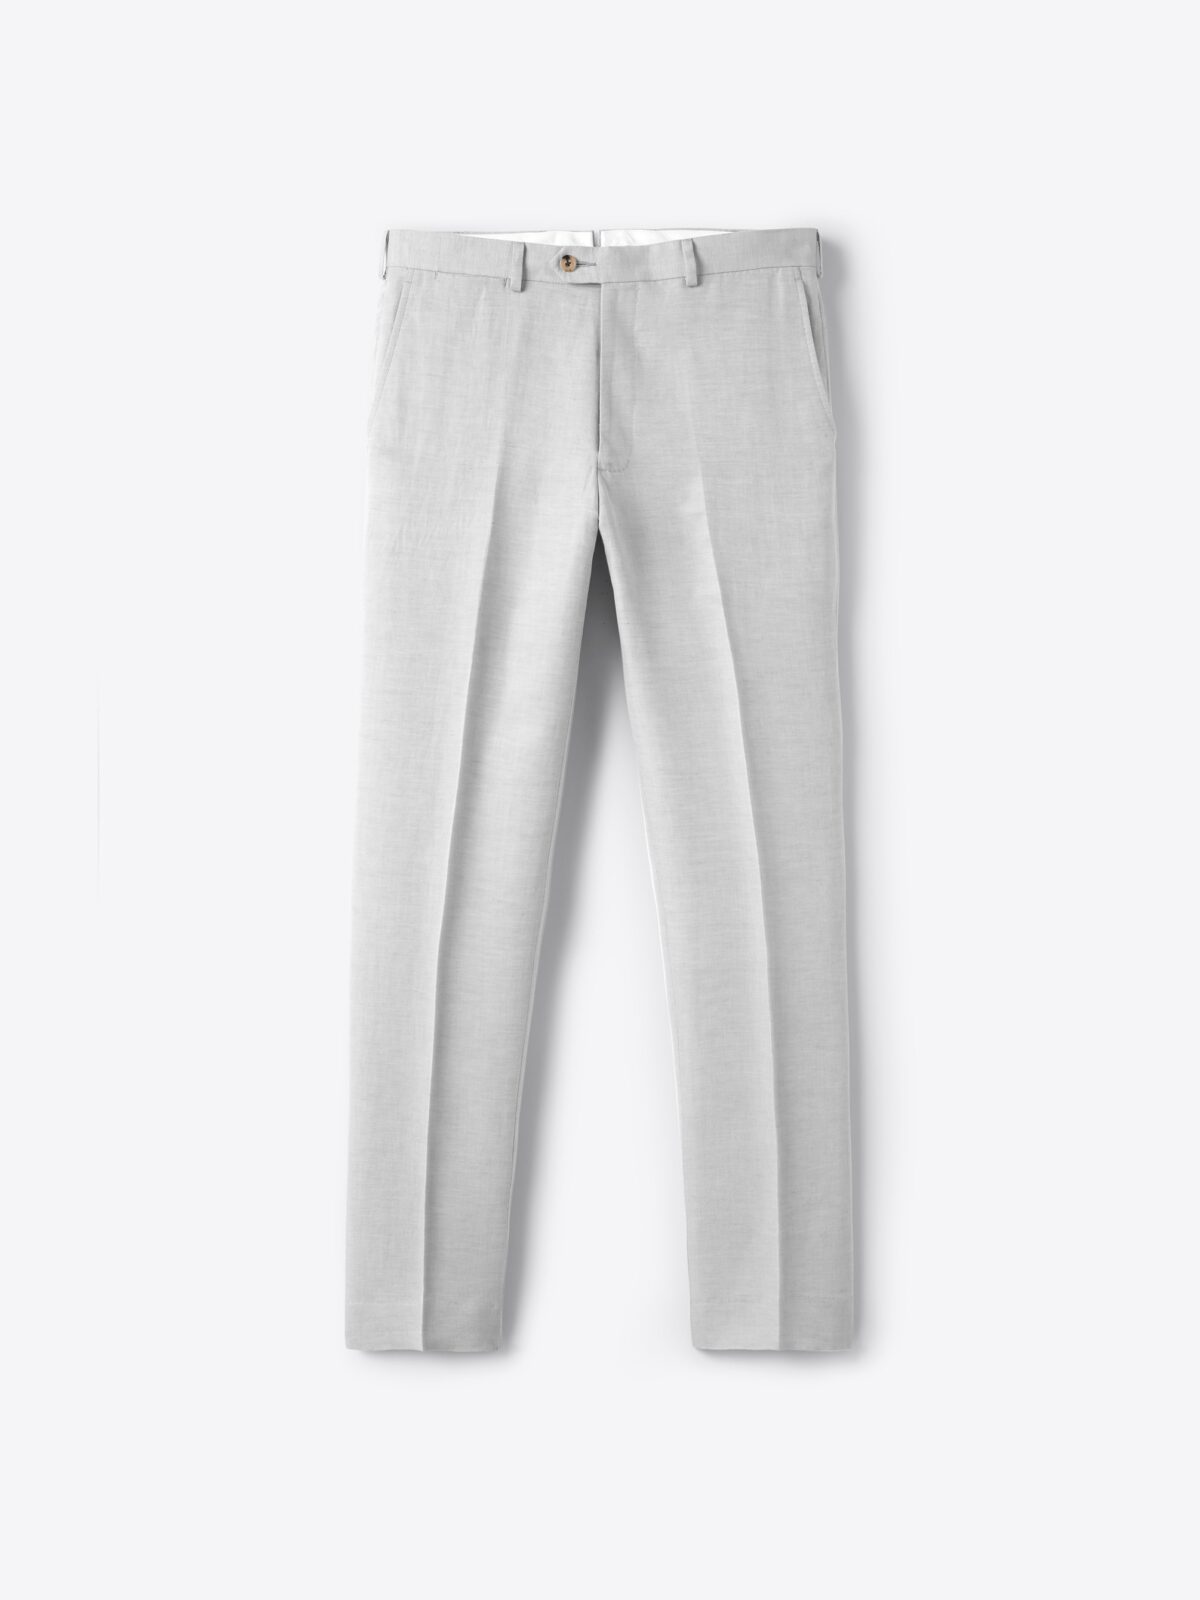 Cotton Jersey Leggings - Light gray melange - Ladies